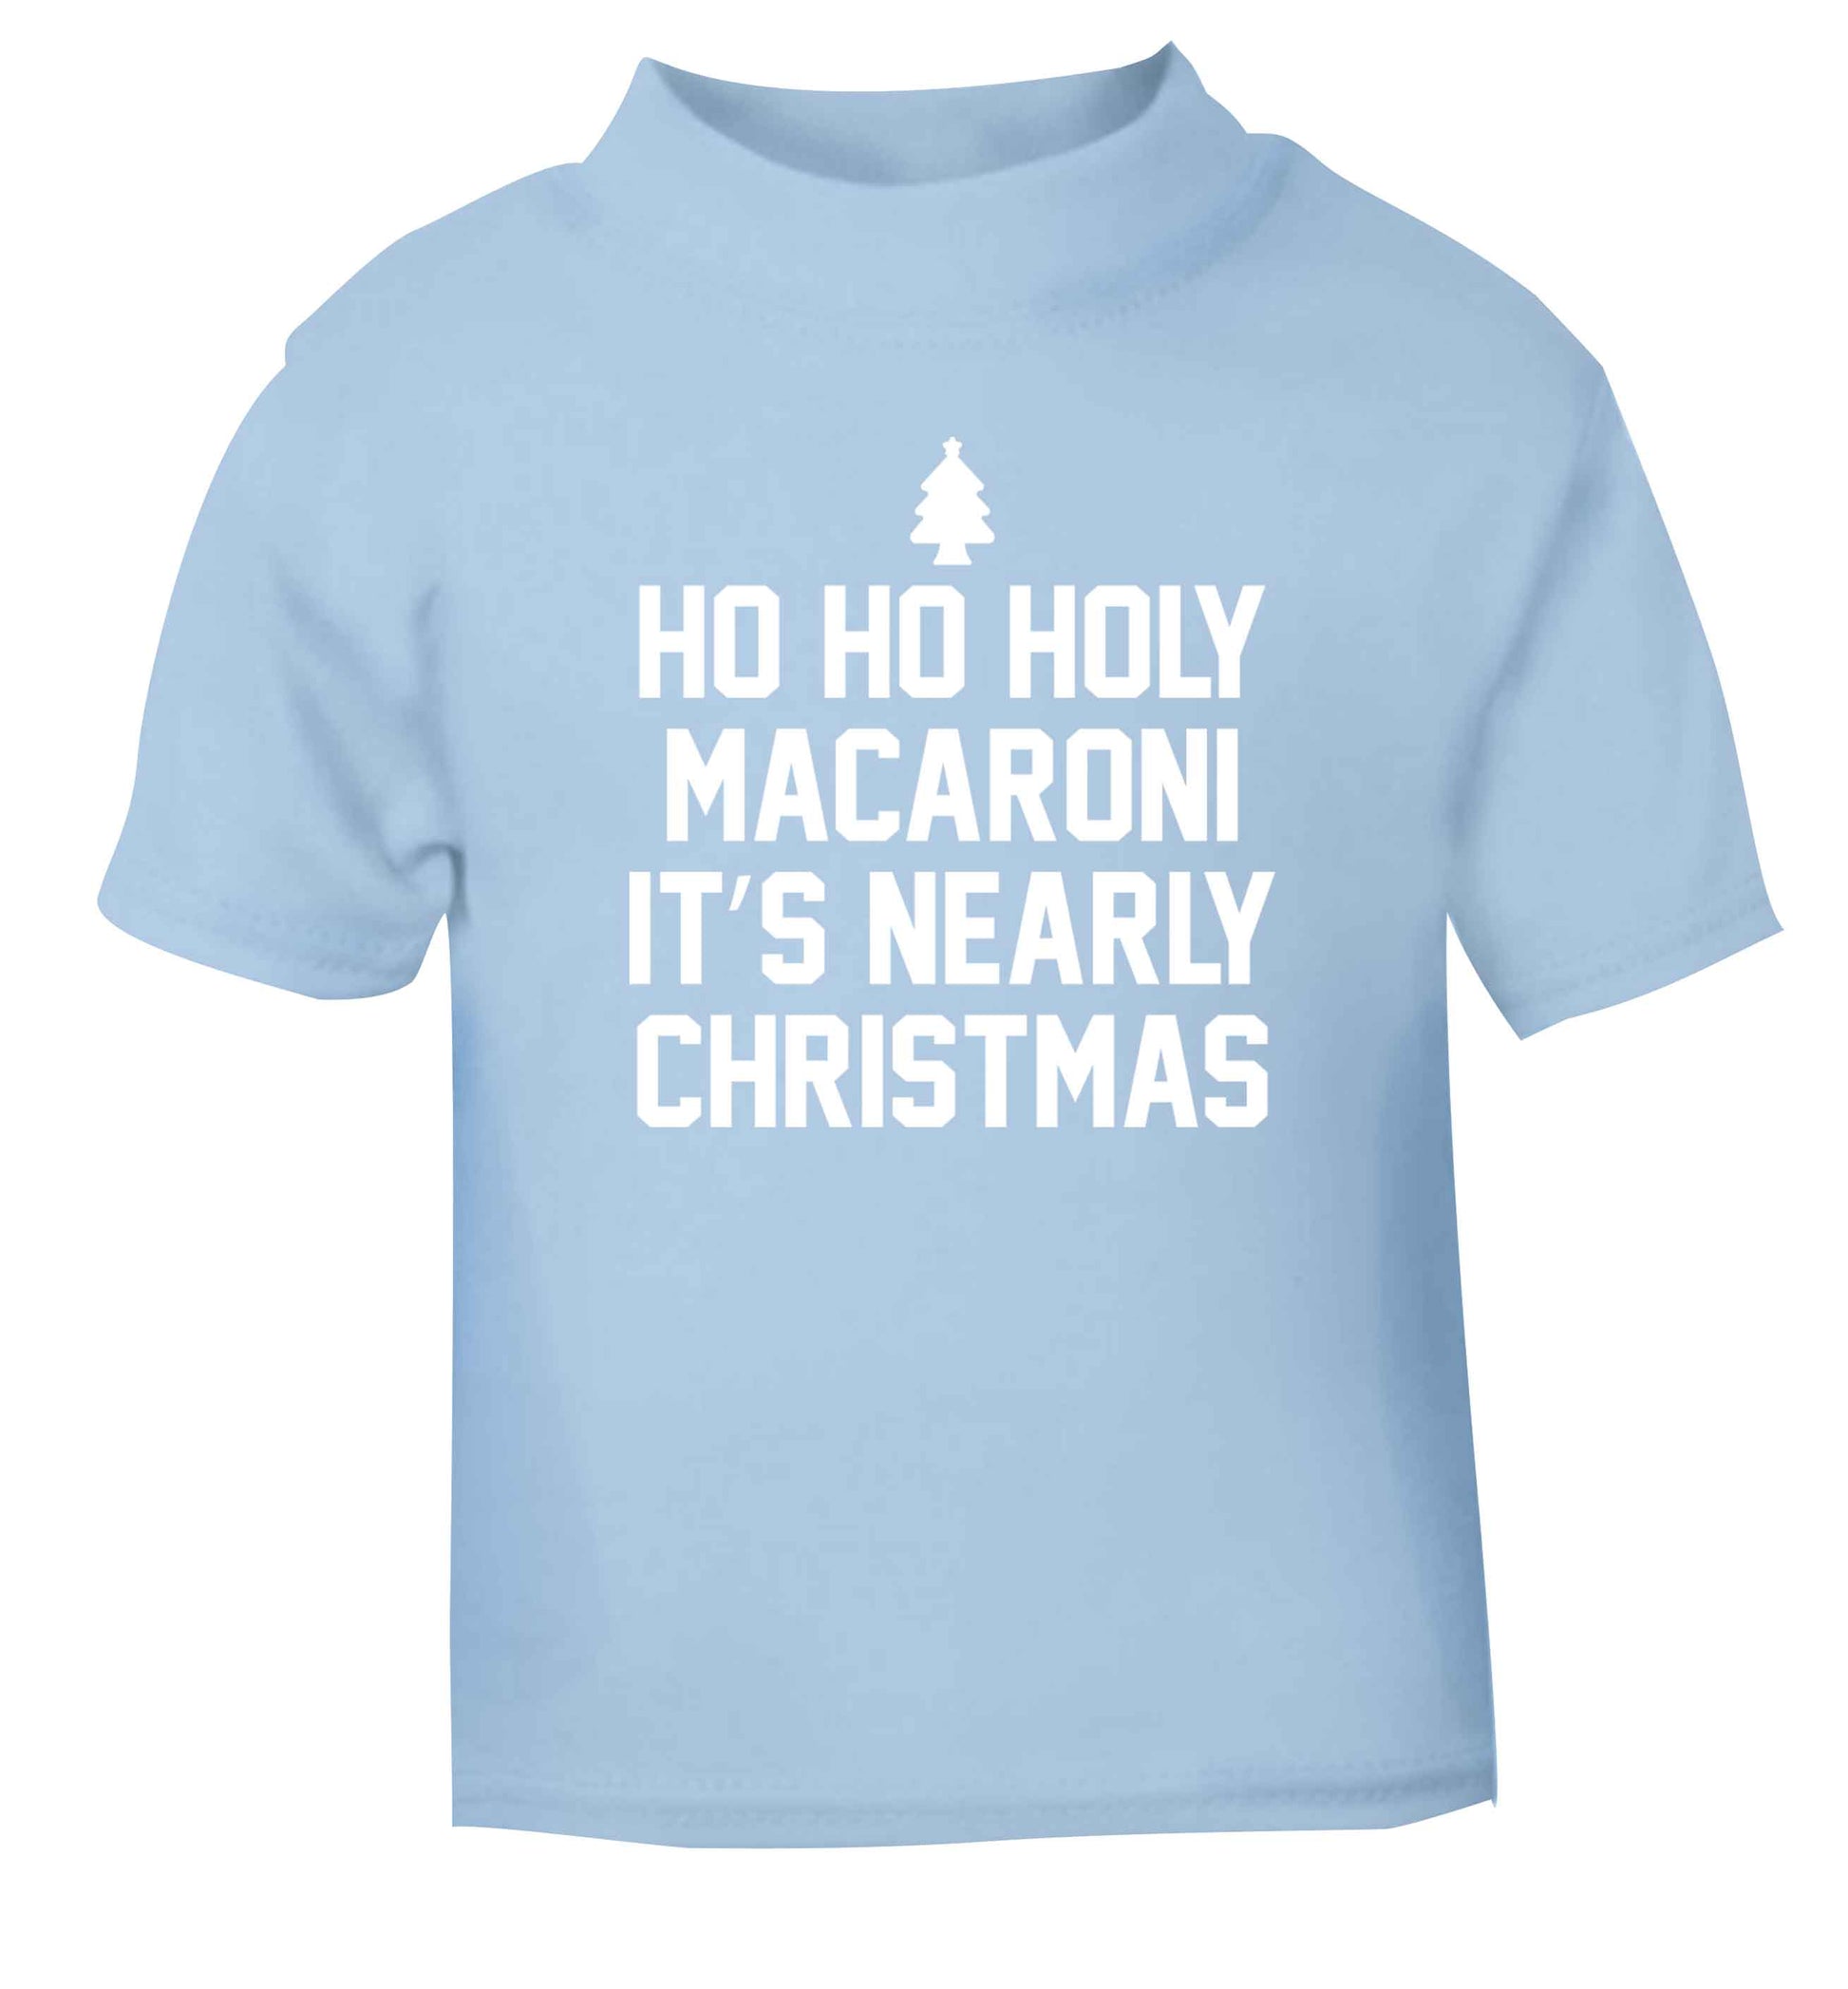 Ho ho holy macaroni it's nearly Christmas light blue Baby Toddler Tshirt 2 Years